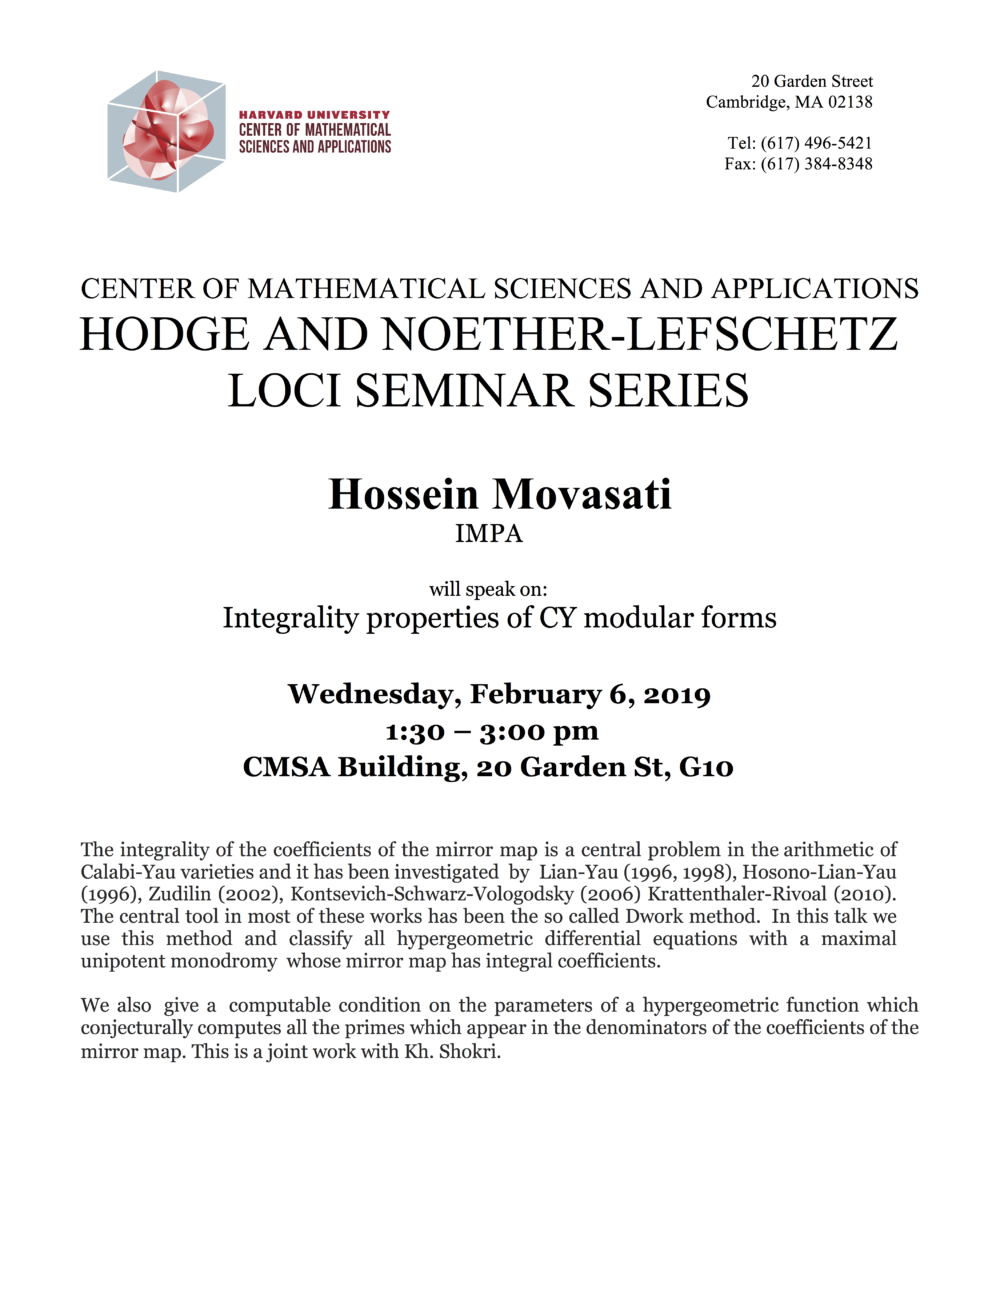 2/6/2019 Hodge and Noether-Lefschetz Loci Seminar